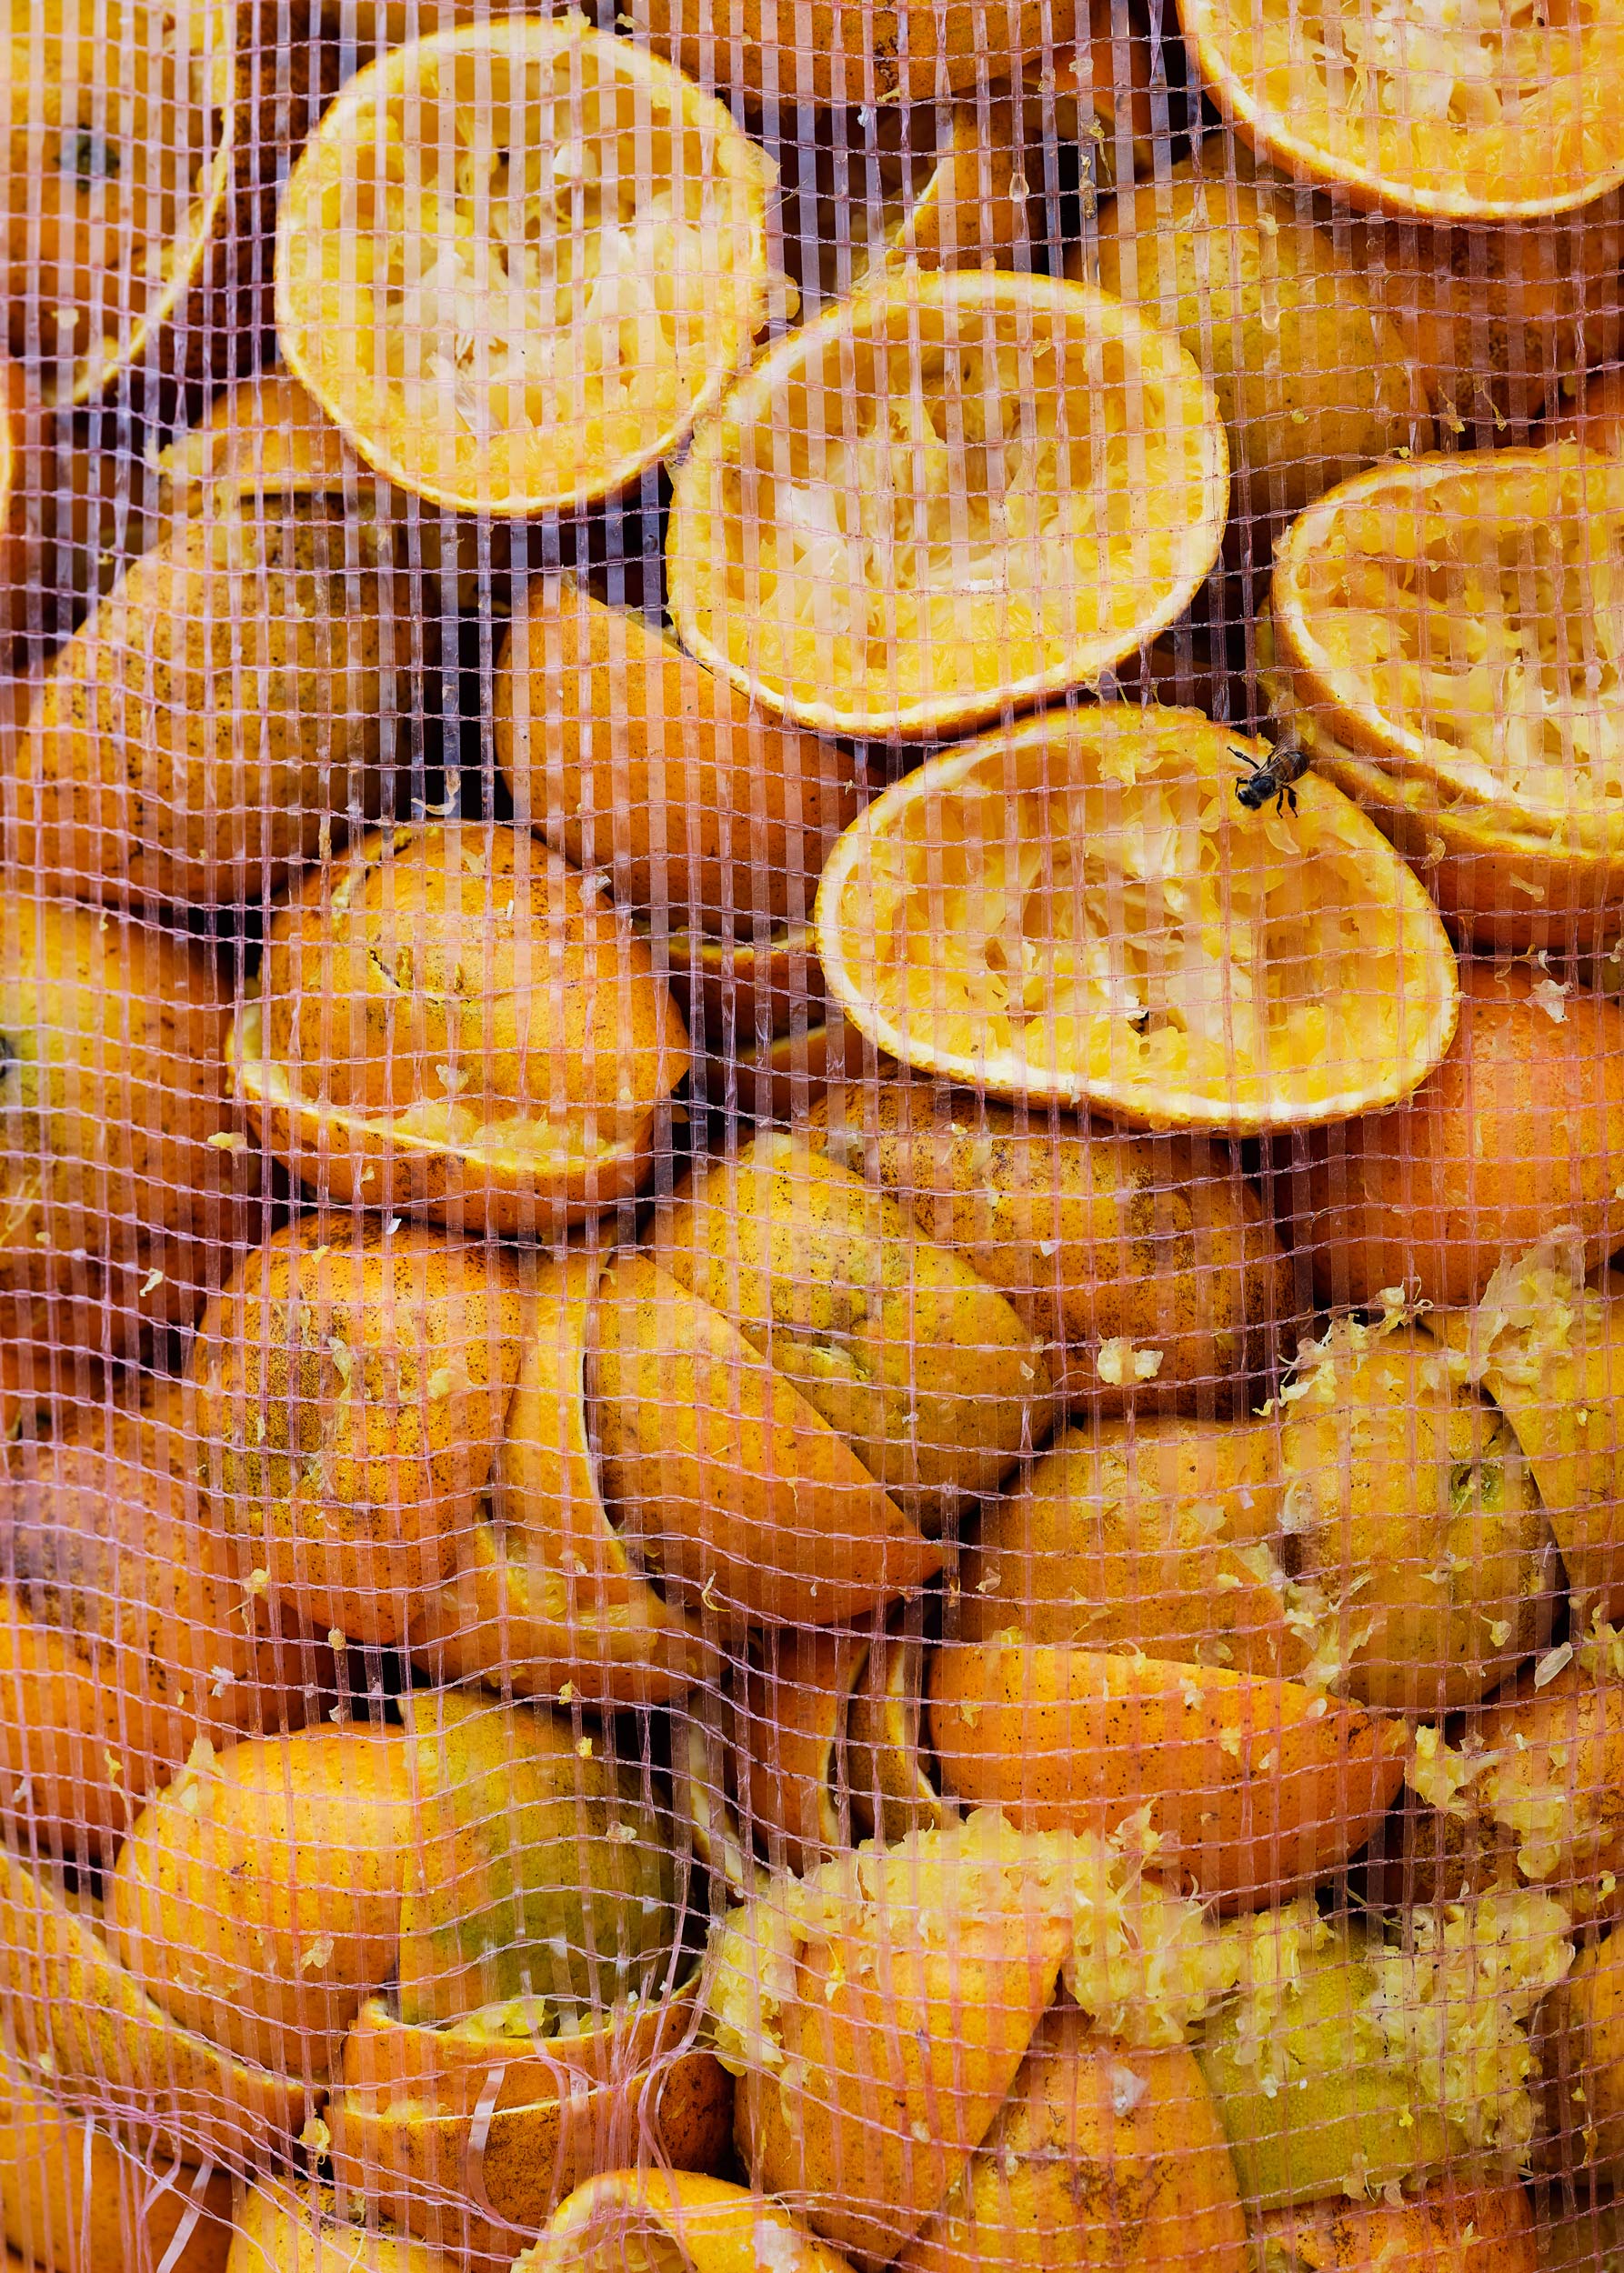 Cart vendor in CDMX selling oranges by travel photographer Nico Schinco. 